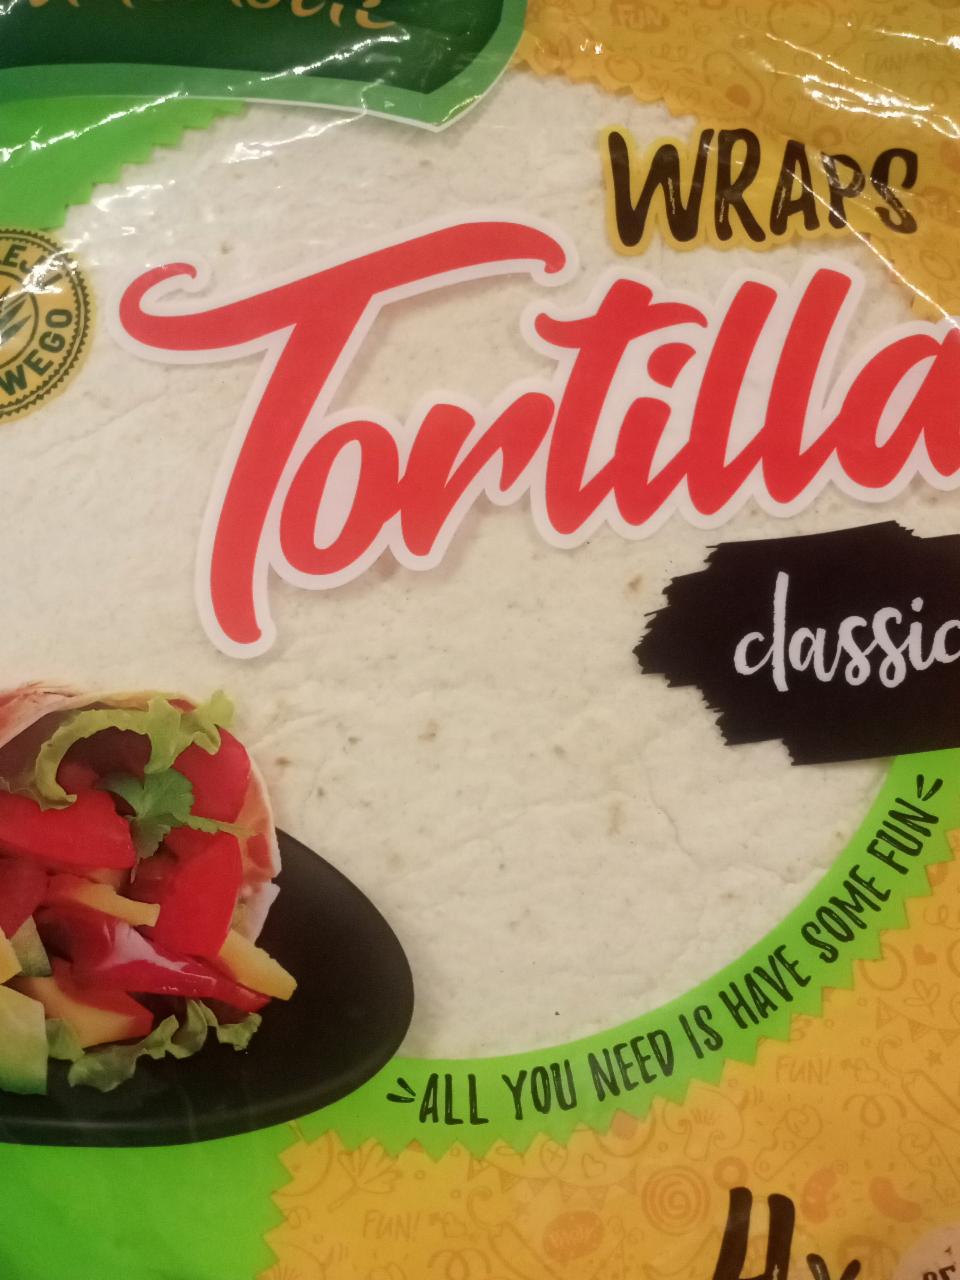 Fotografie - Wraps Tortilla classic